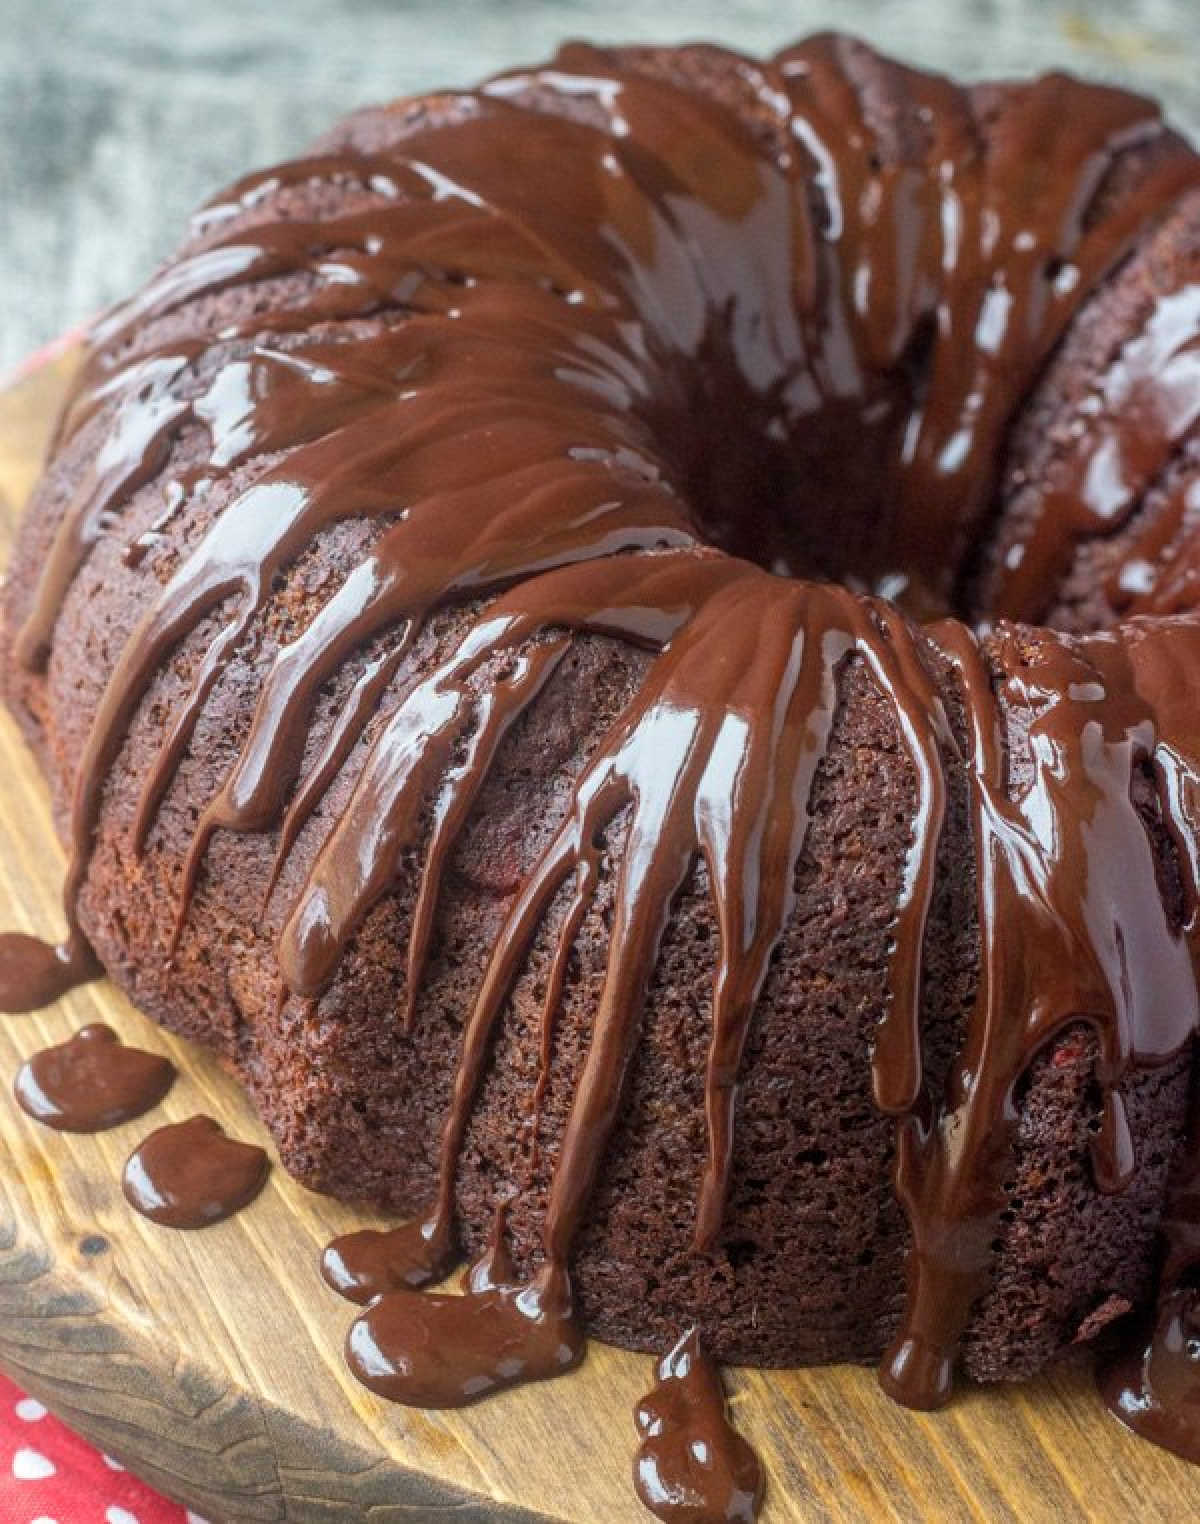 fudgy chocolate glaze over chocolate bundt cake.